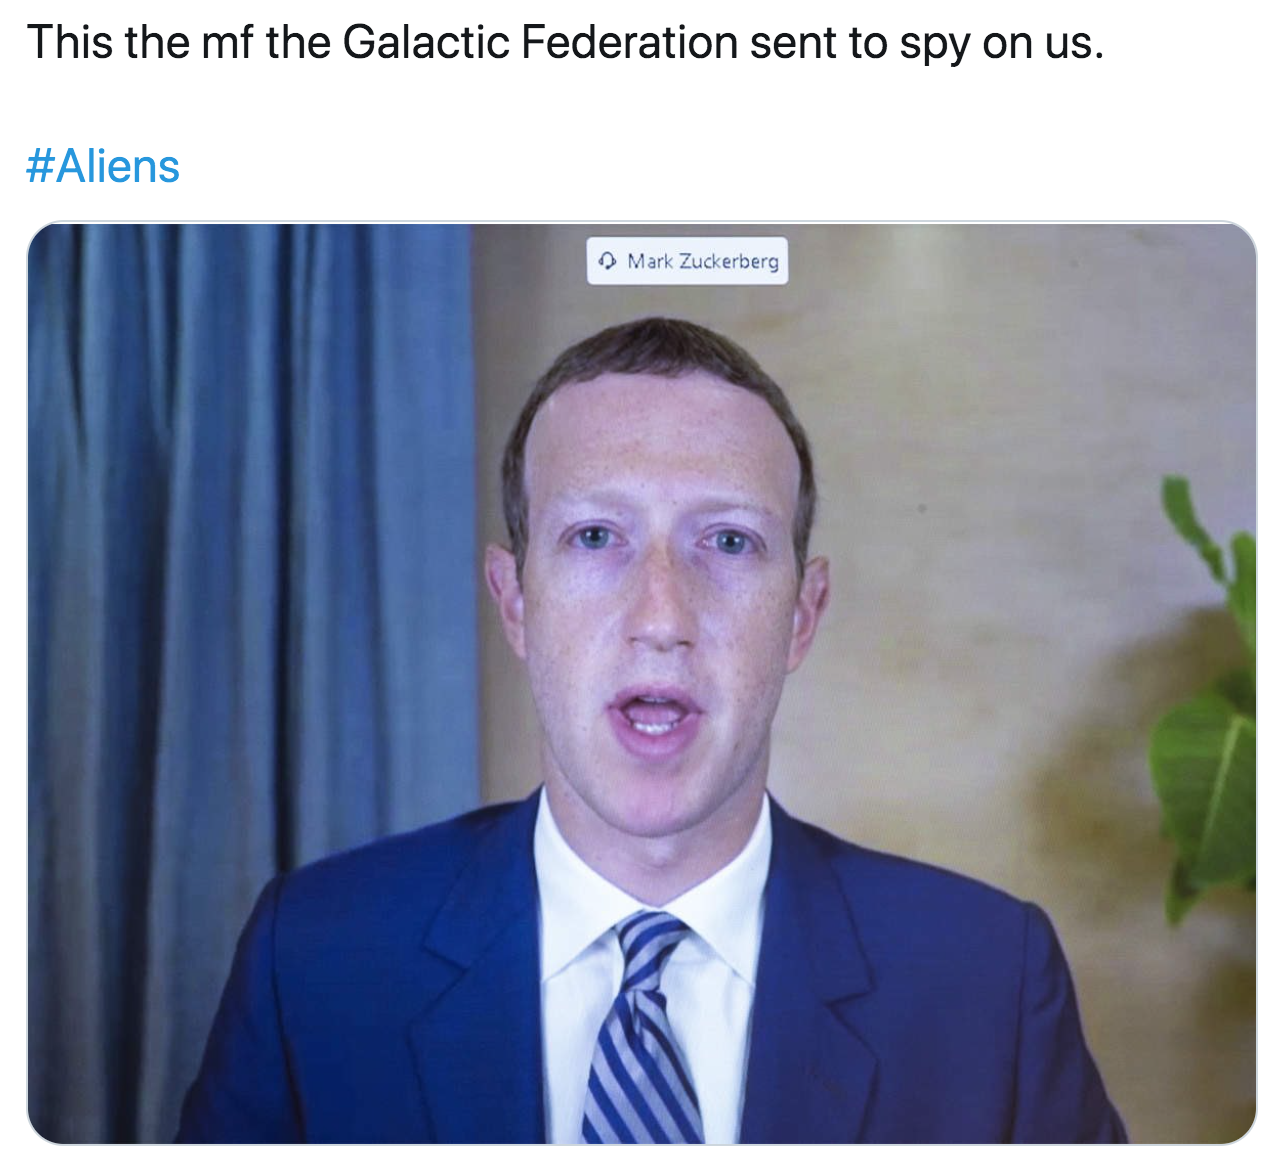 mark zuckerberg - This the mf the Galactic Federation sent to spy on us. Mark Zuckerbers